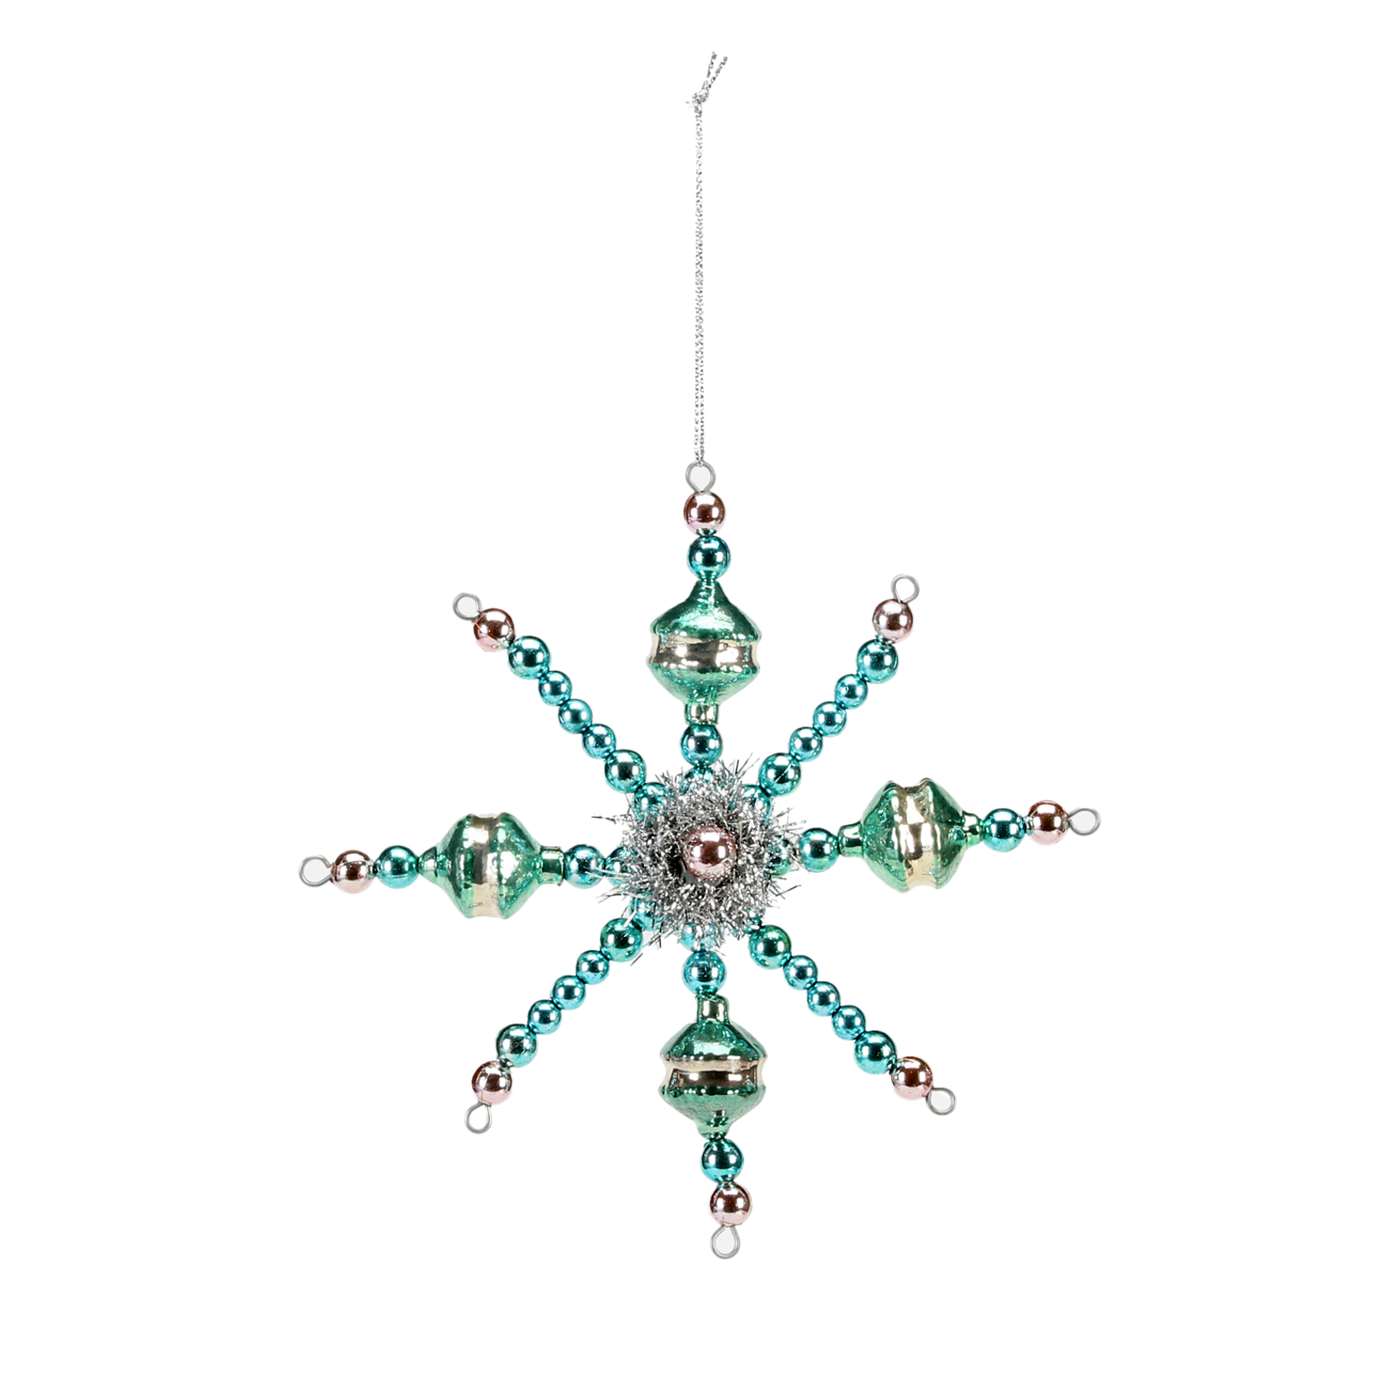 Vintage Snowflake Ornament - Teal